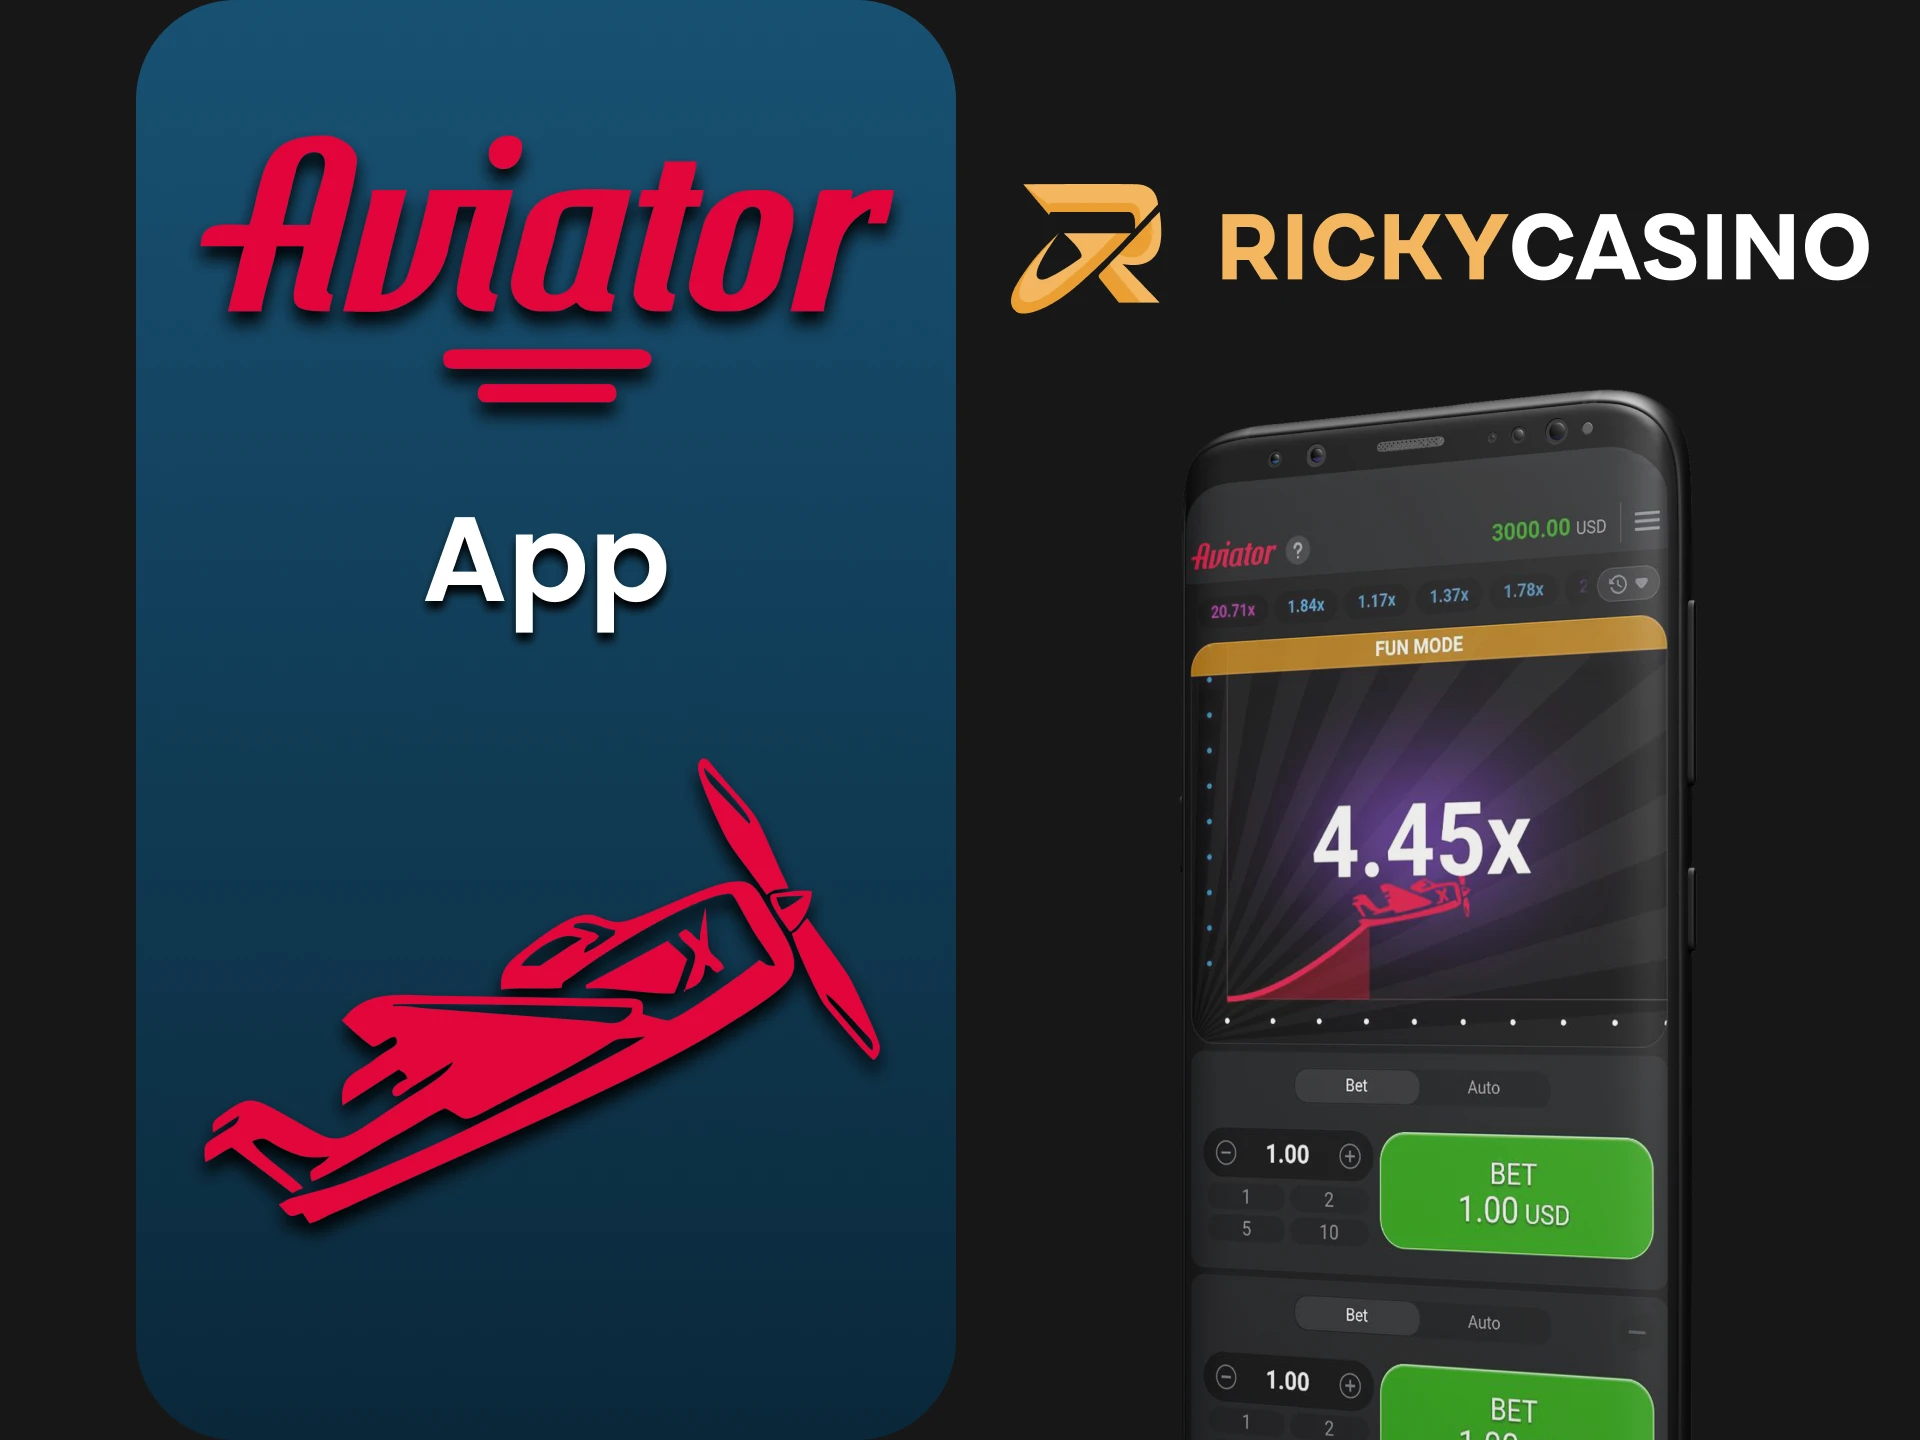 Use the Ricky Casino app to play Aviator.